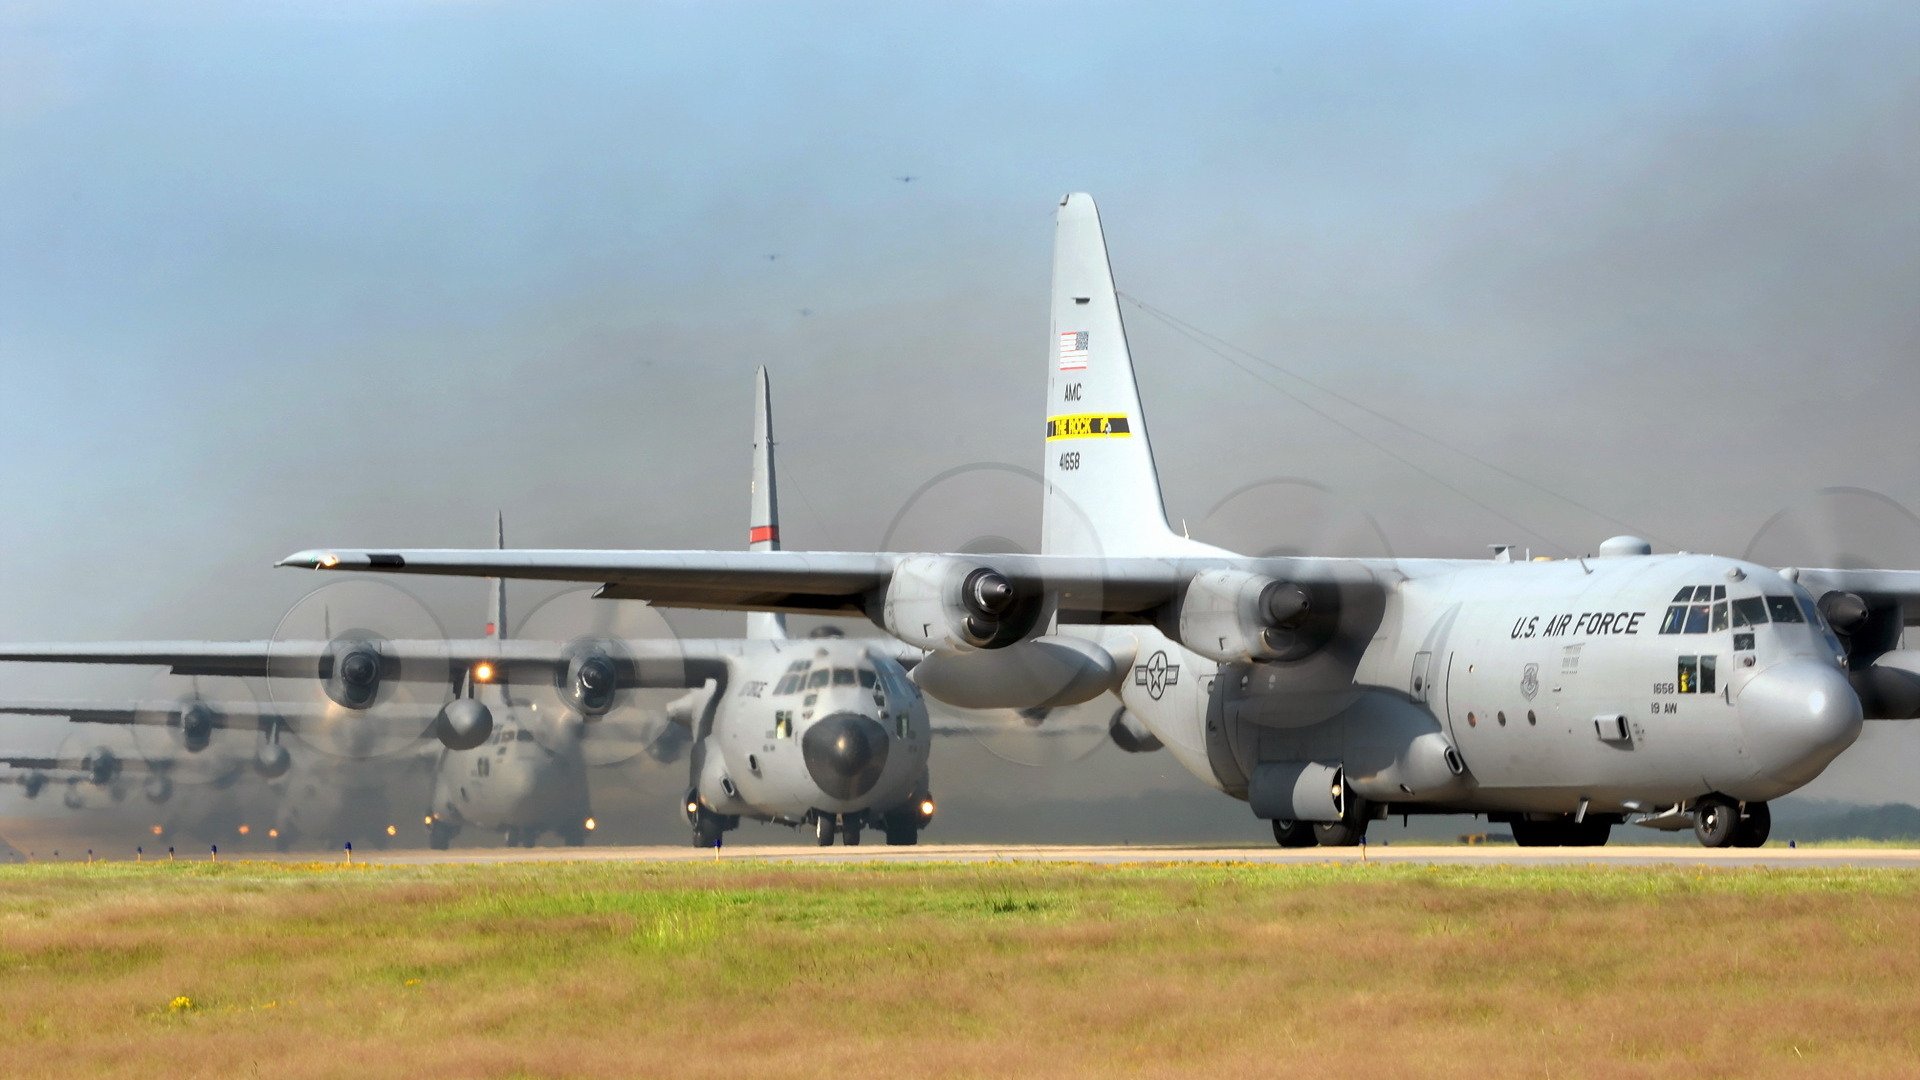 C 130 50. C-130 Hercules. Hercules c130 взлёт с авианосца. Pakistan Air Force c-130 Hercules. Локхид Геркулес.